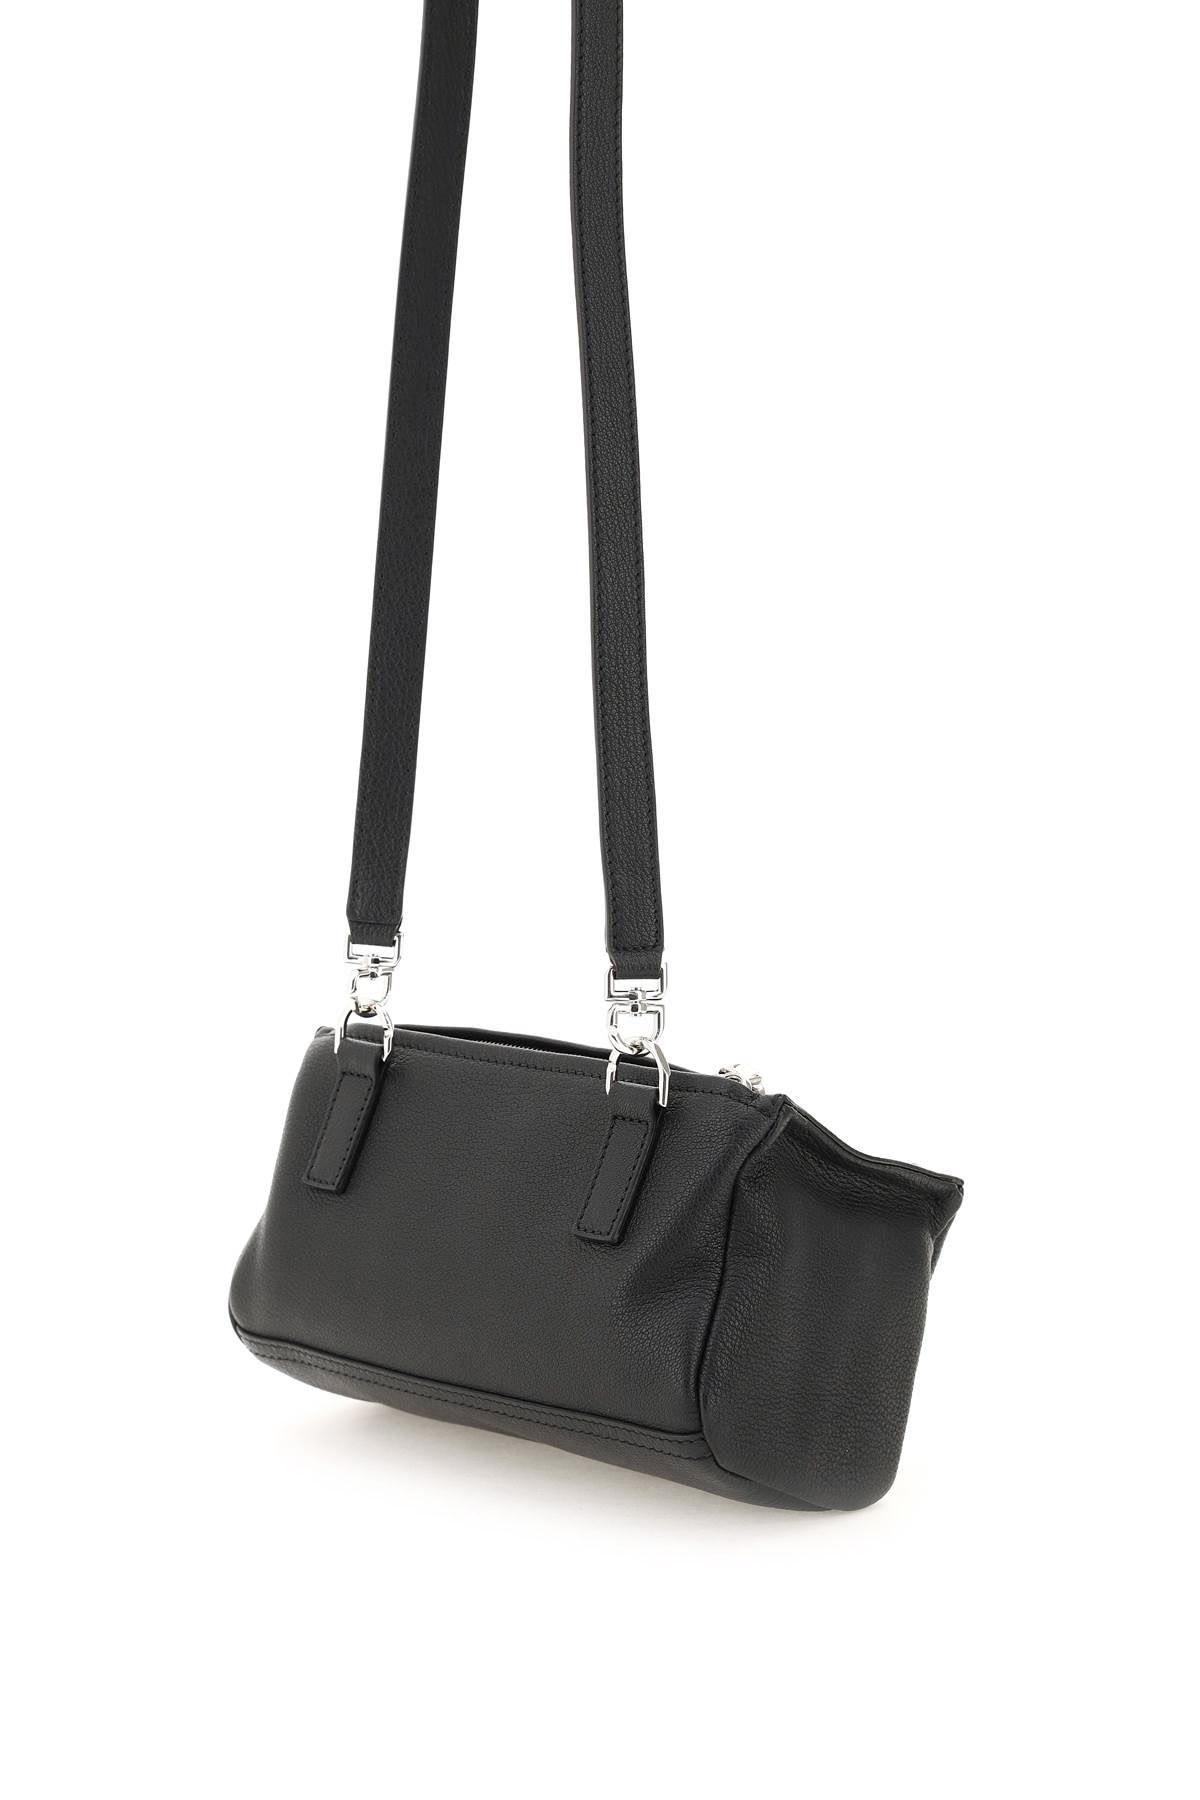 Givenchy Pandora Mini Bag in Black | Lyst